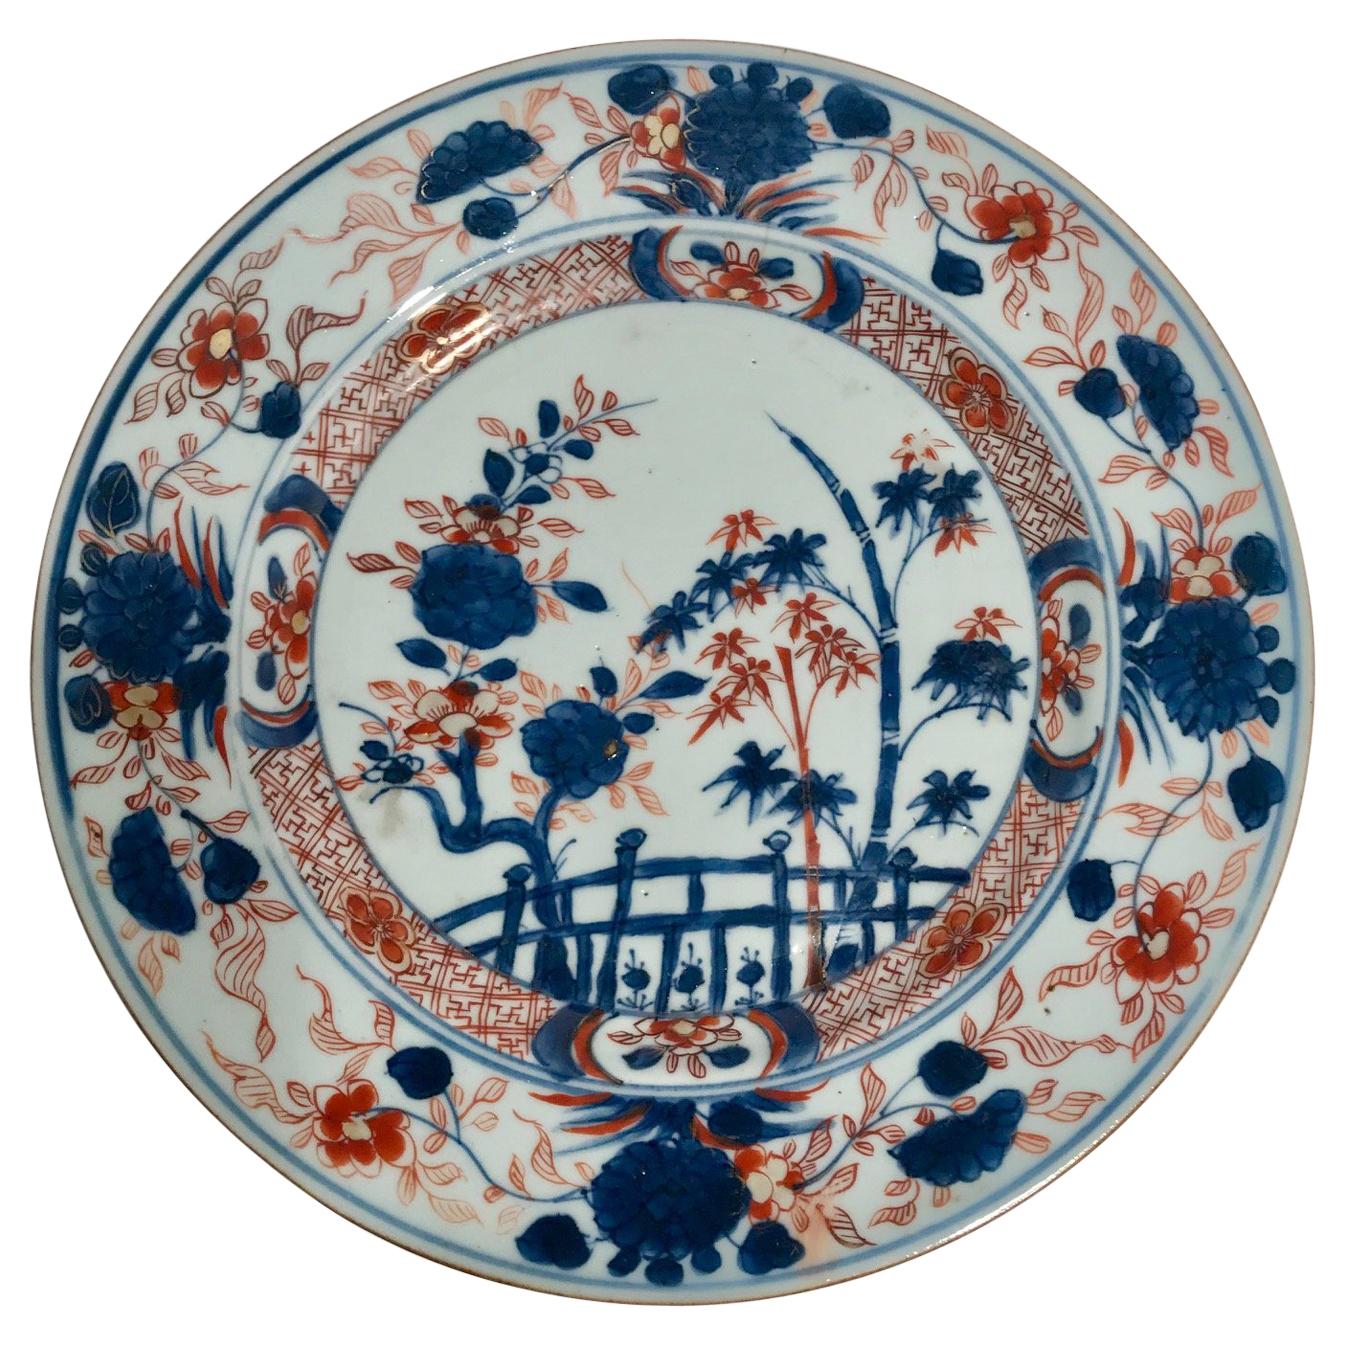  Chinese Export Plate in the Imari Taste